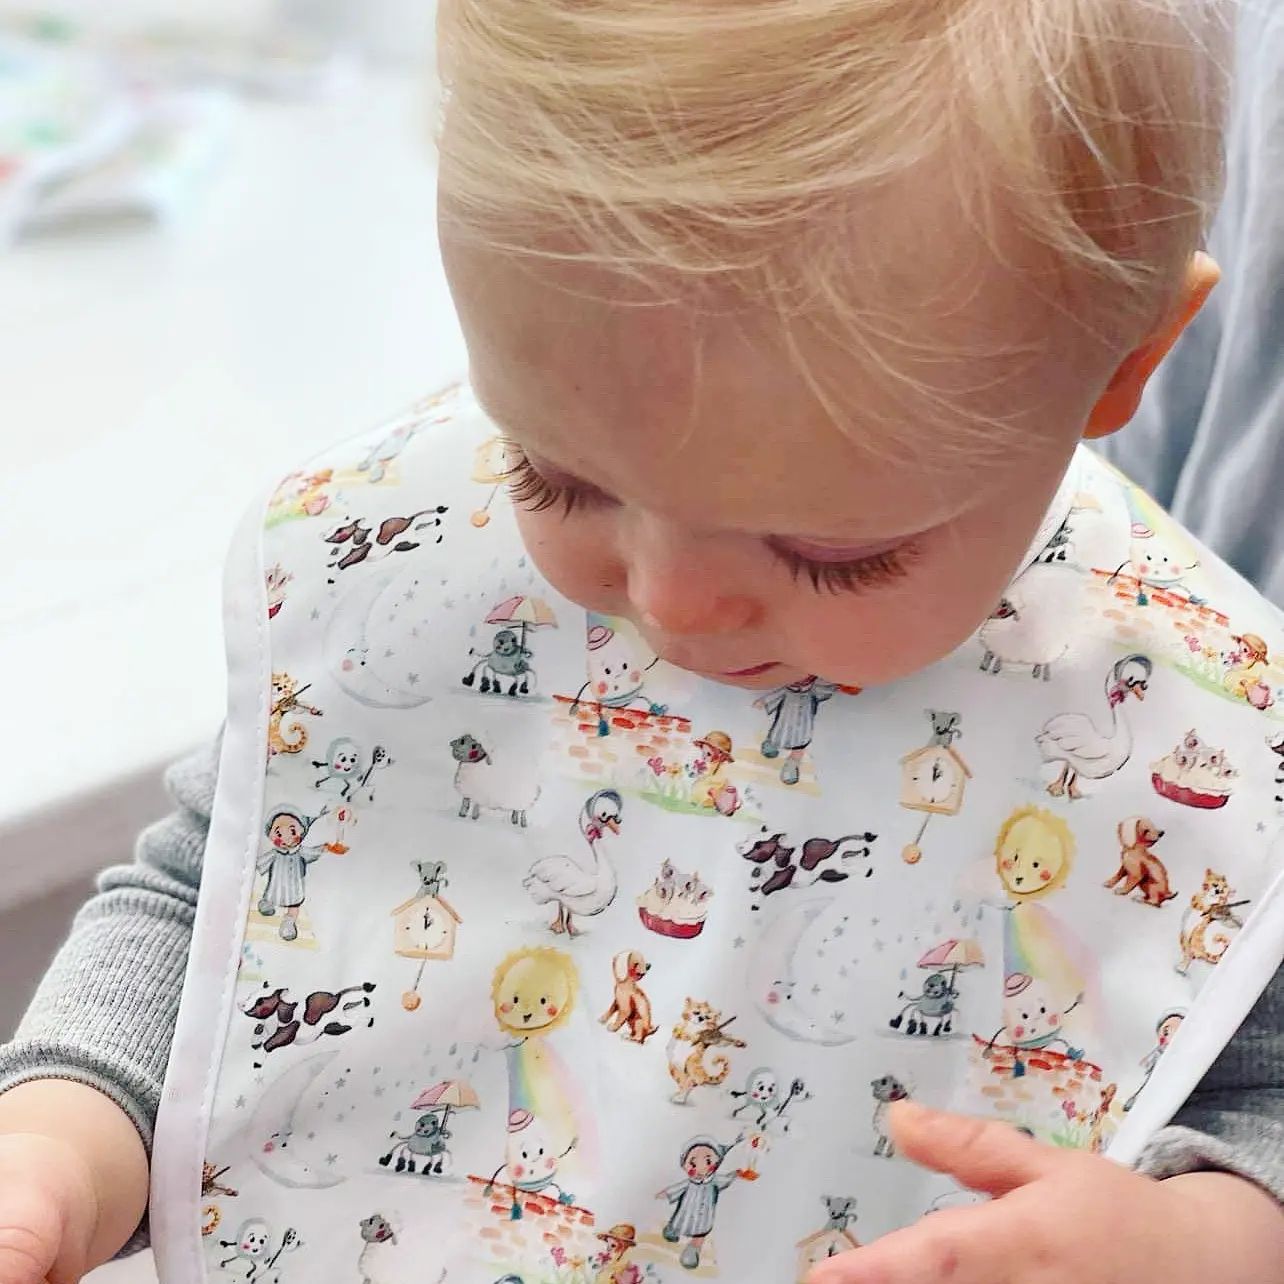 Baby wearing a bib featuring a nursery rhyme print